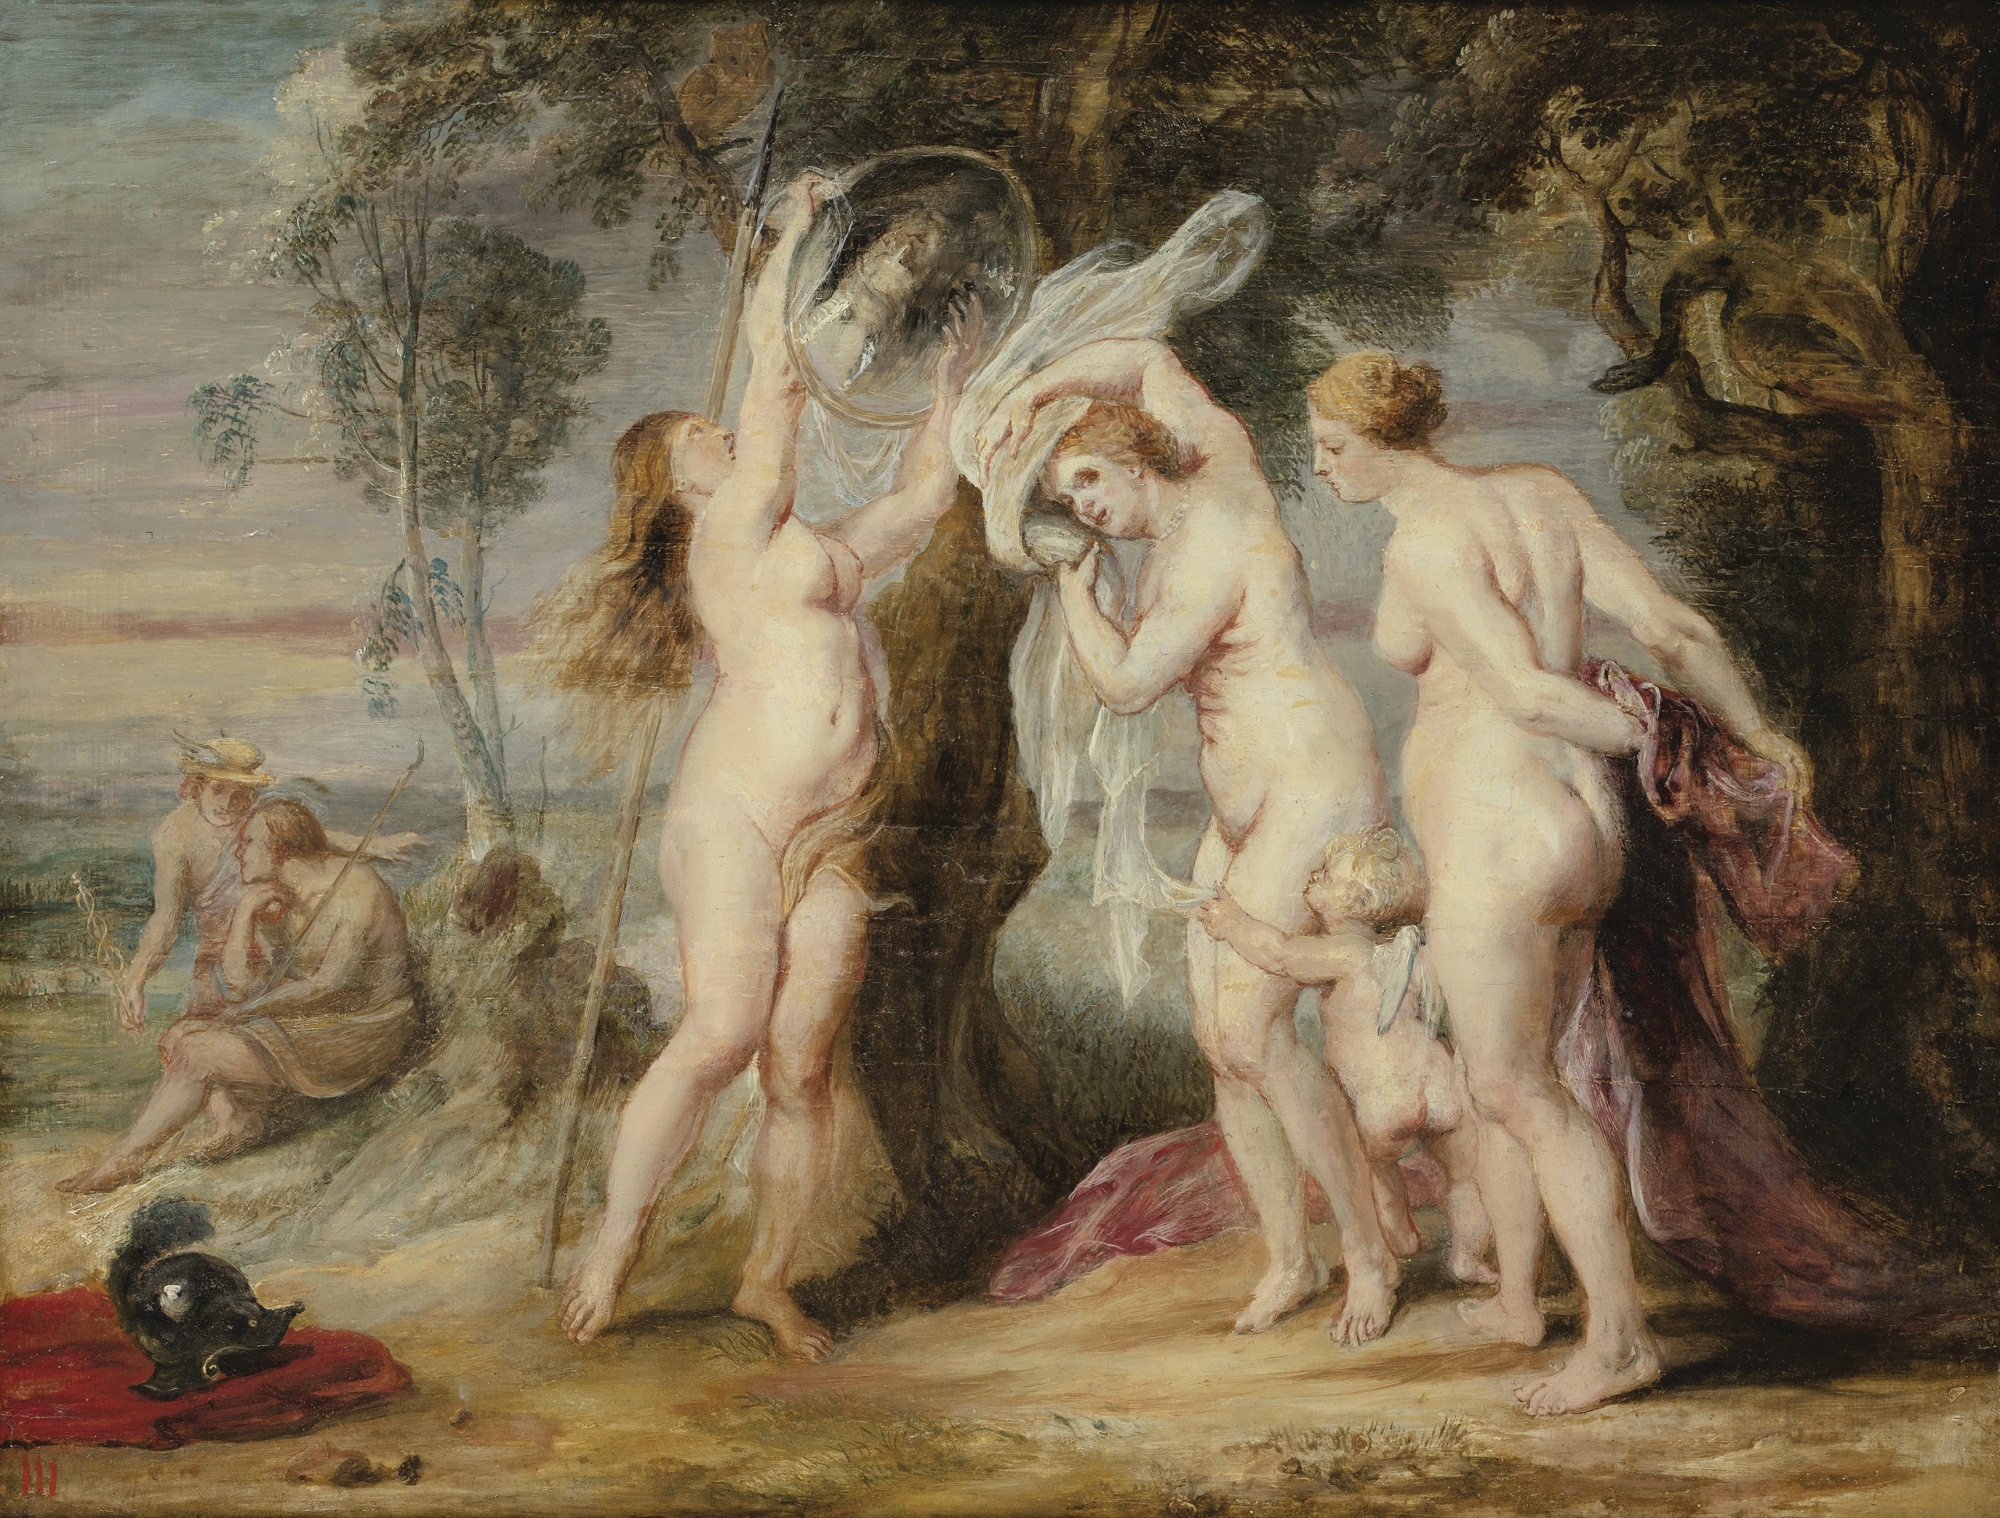 THE JUDGEMENT OF PARIS by Peter Paul Rubens